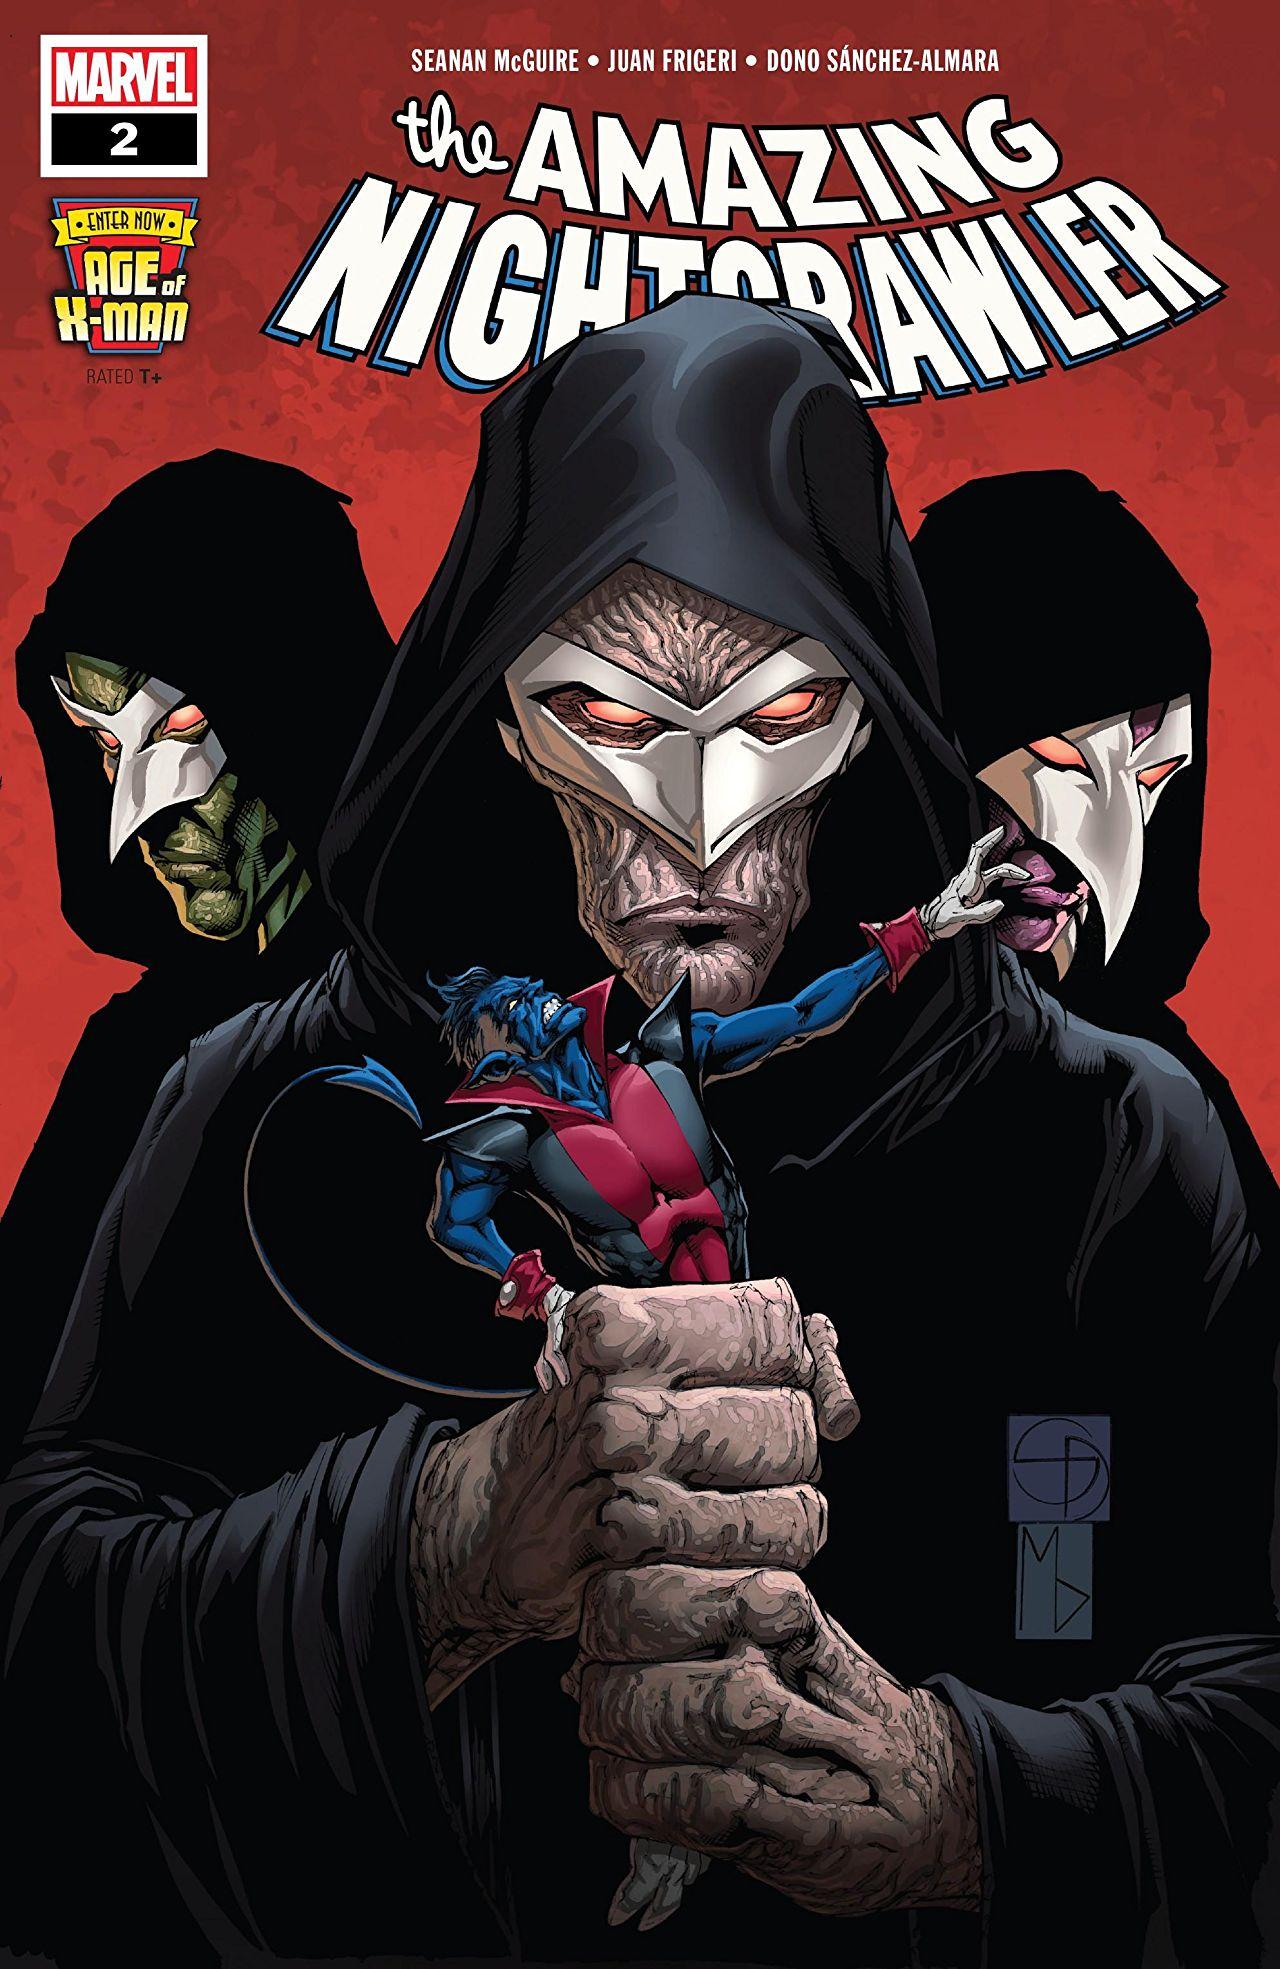 Age of X-Man: The Amazing Nightcrawler Vol. 1 #2